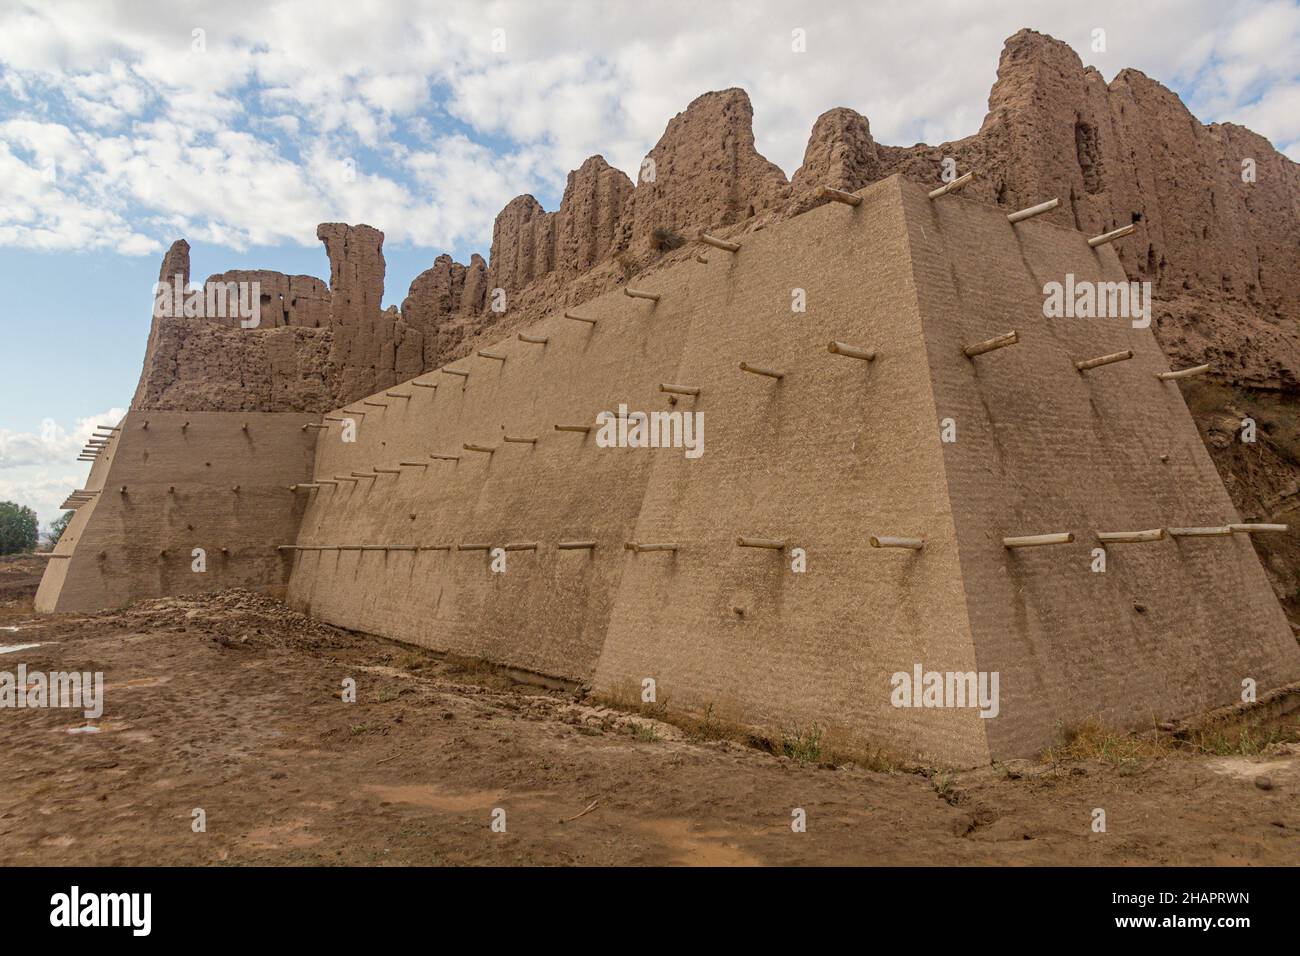 Kyzyl Qala Kala fortress in Kyzylkum desert, Uzbekistan Stock Photo